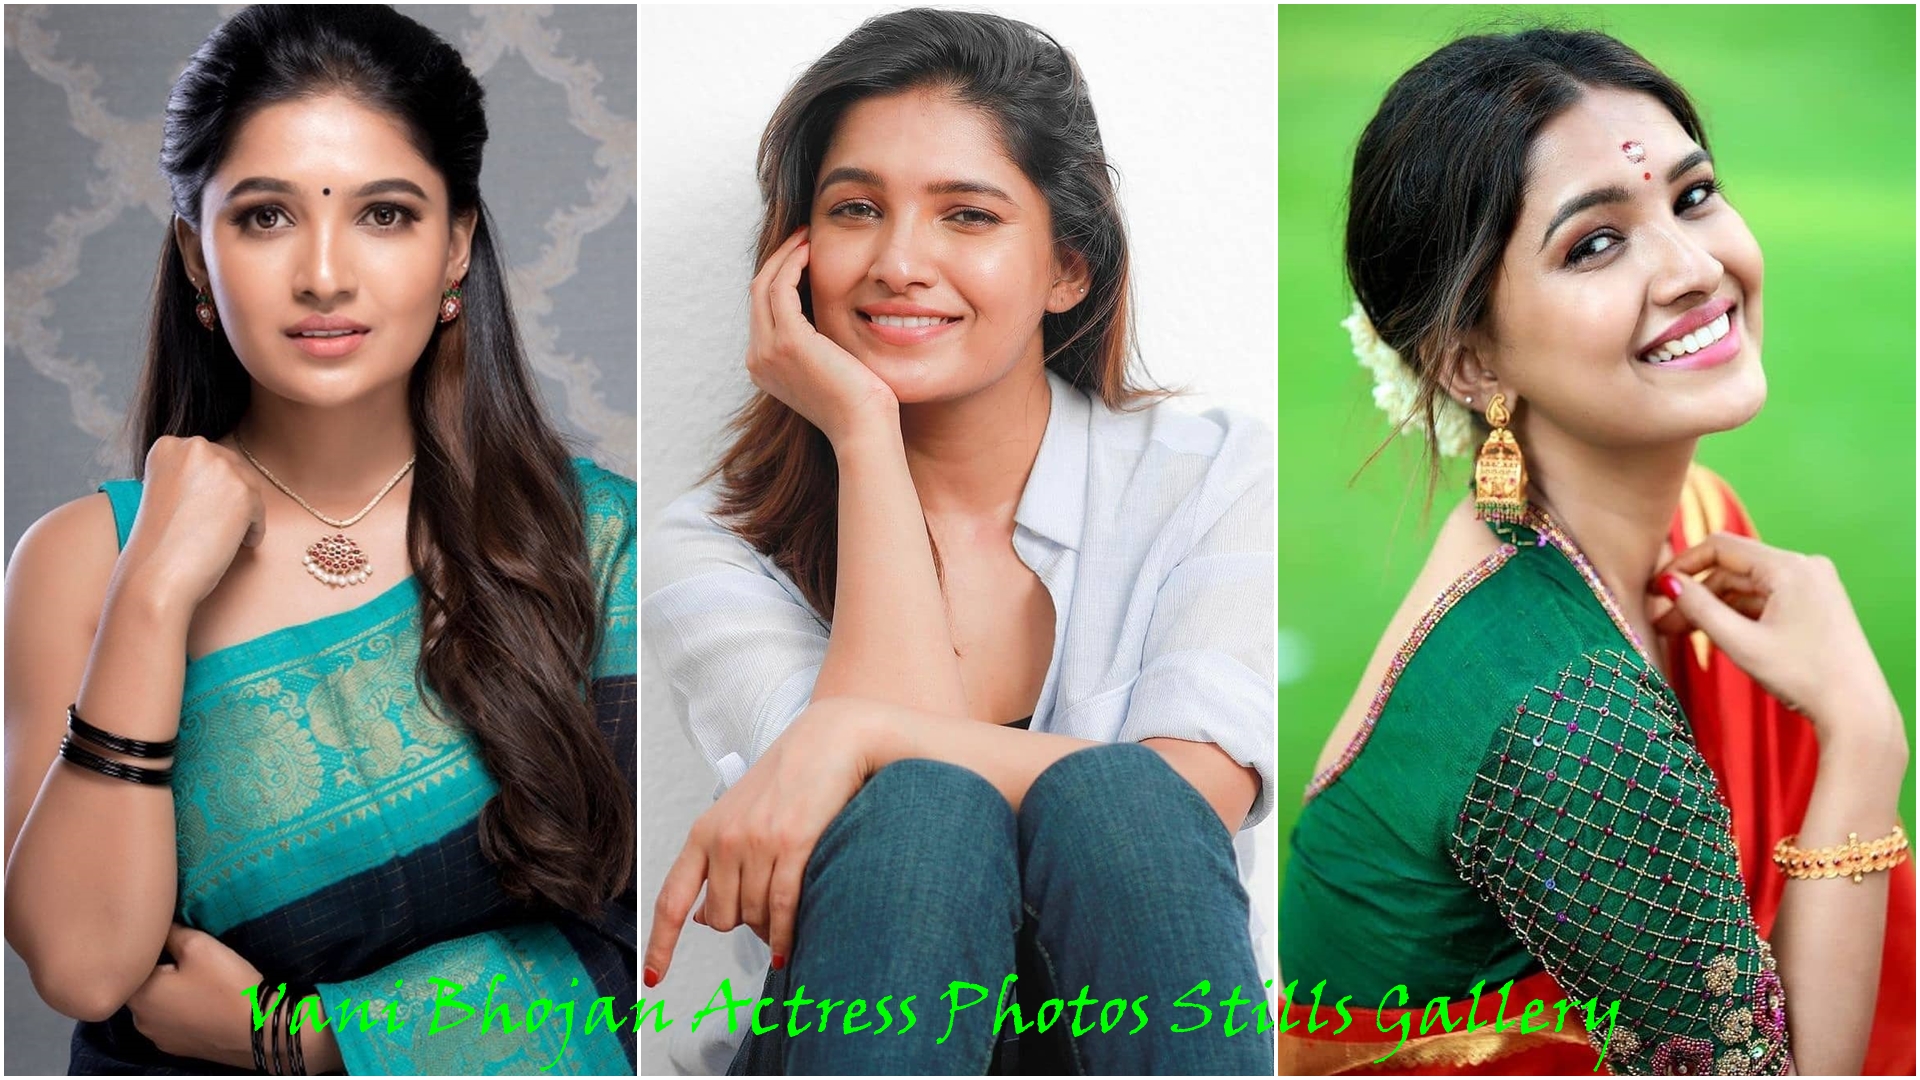 Vani Bhojan Actress Photos Stills Gallery (7)